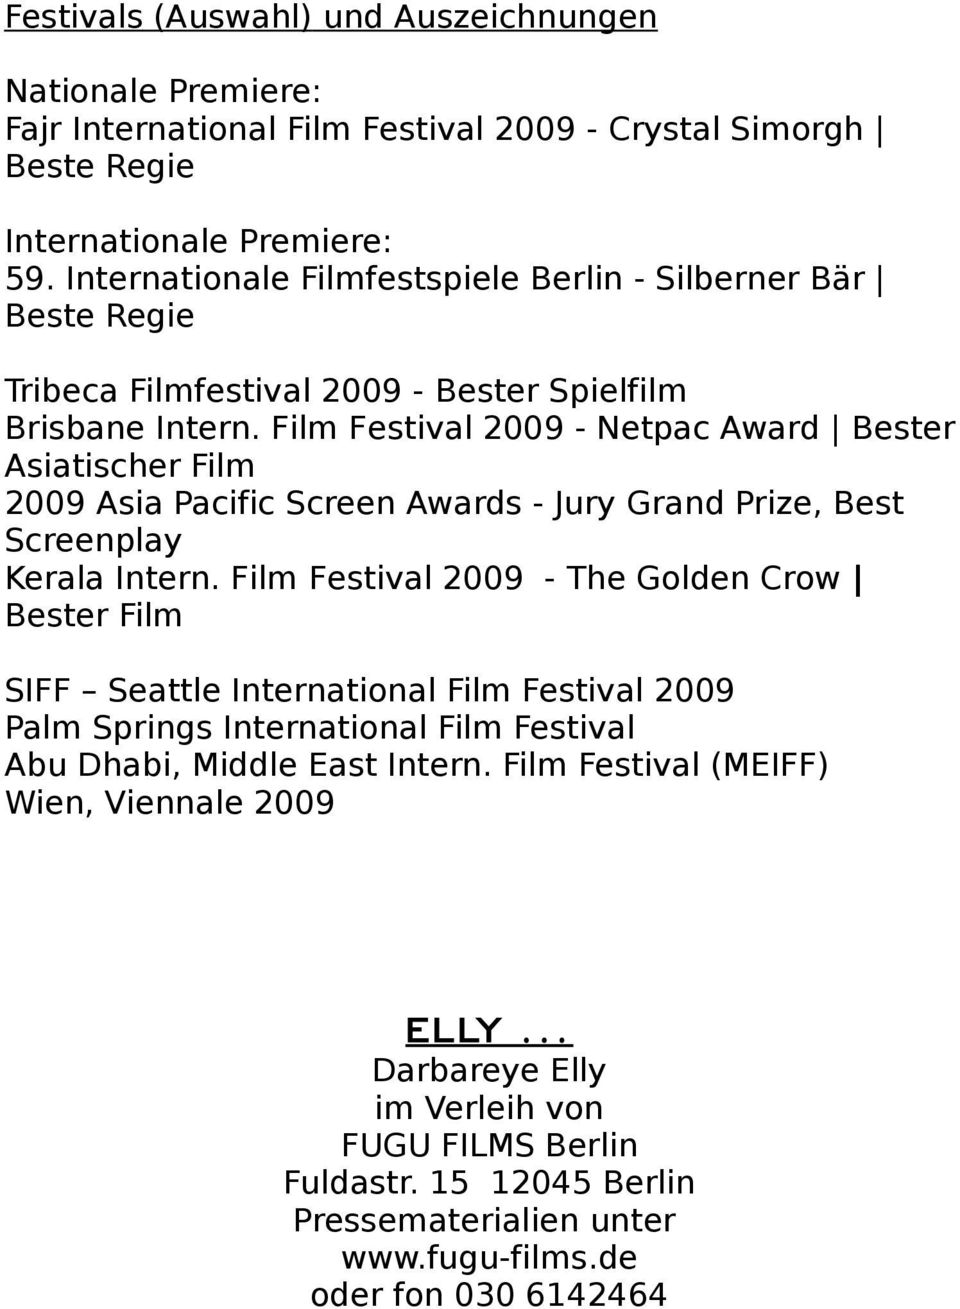 Film Festival 2009 - Netpac Award Bester Asiatischer Film 2009 Asia Pacific Screen Awards - Jury Grand Prize, Best Screenplay Kerala Intern.